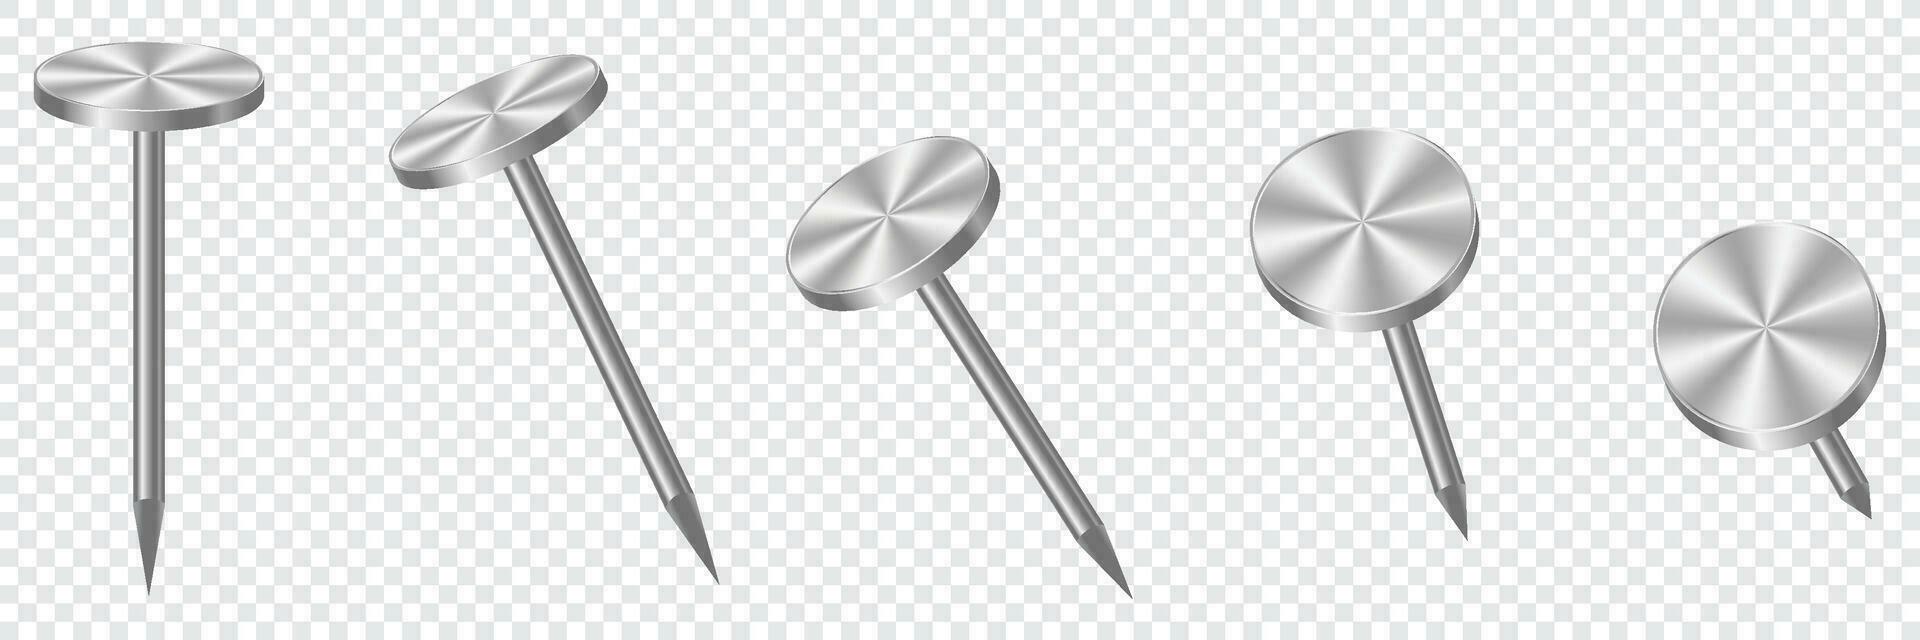 Realistic 3d metal nails. Nail metal. Realistic set of metal pins. Metallic hardware vector set. Vector illustration